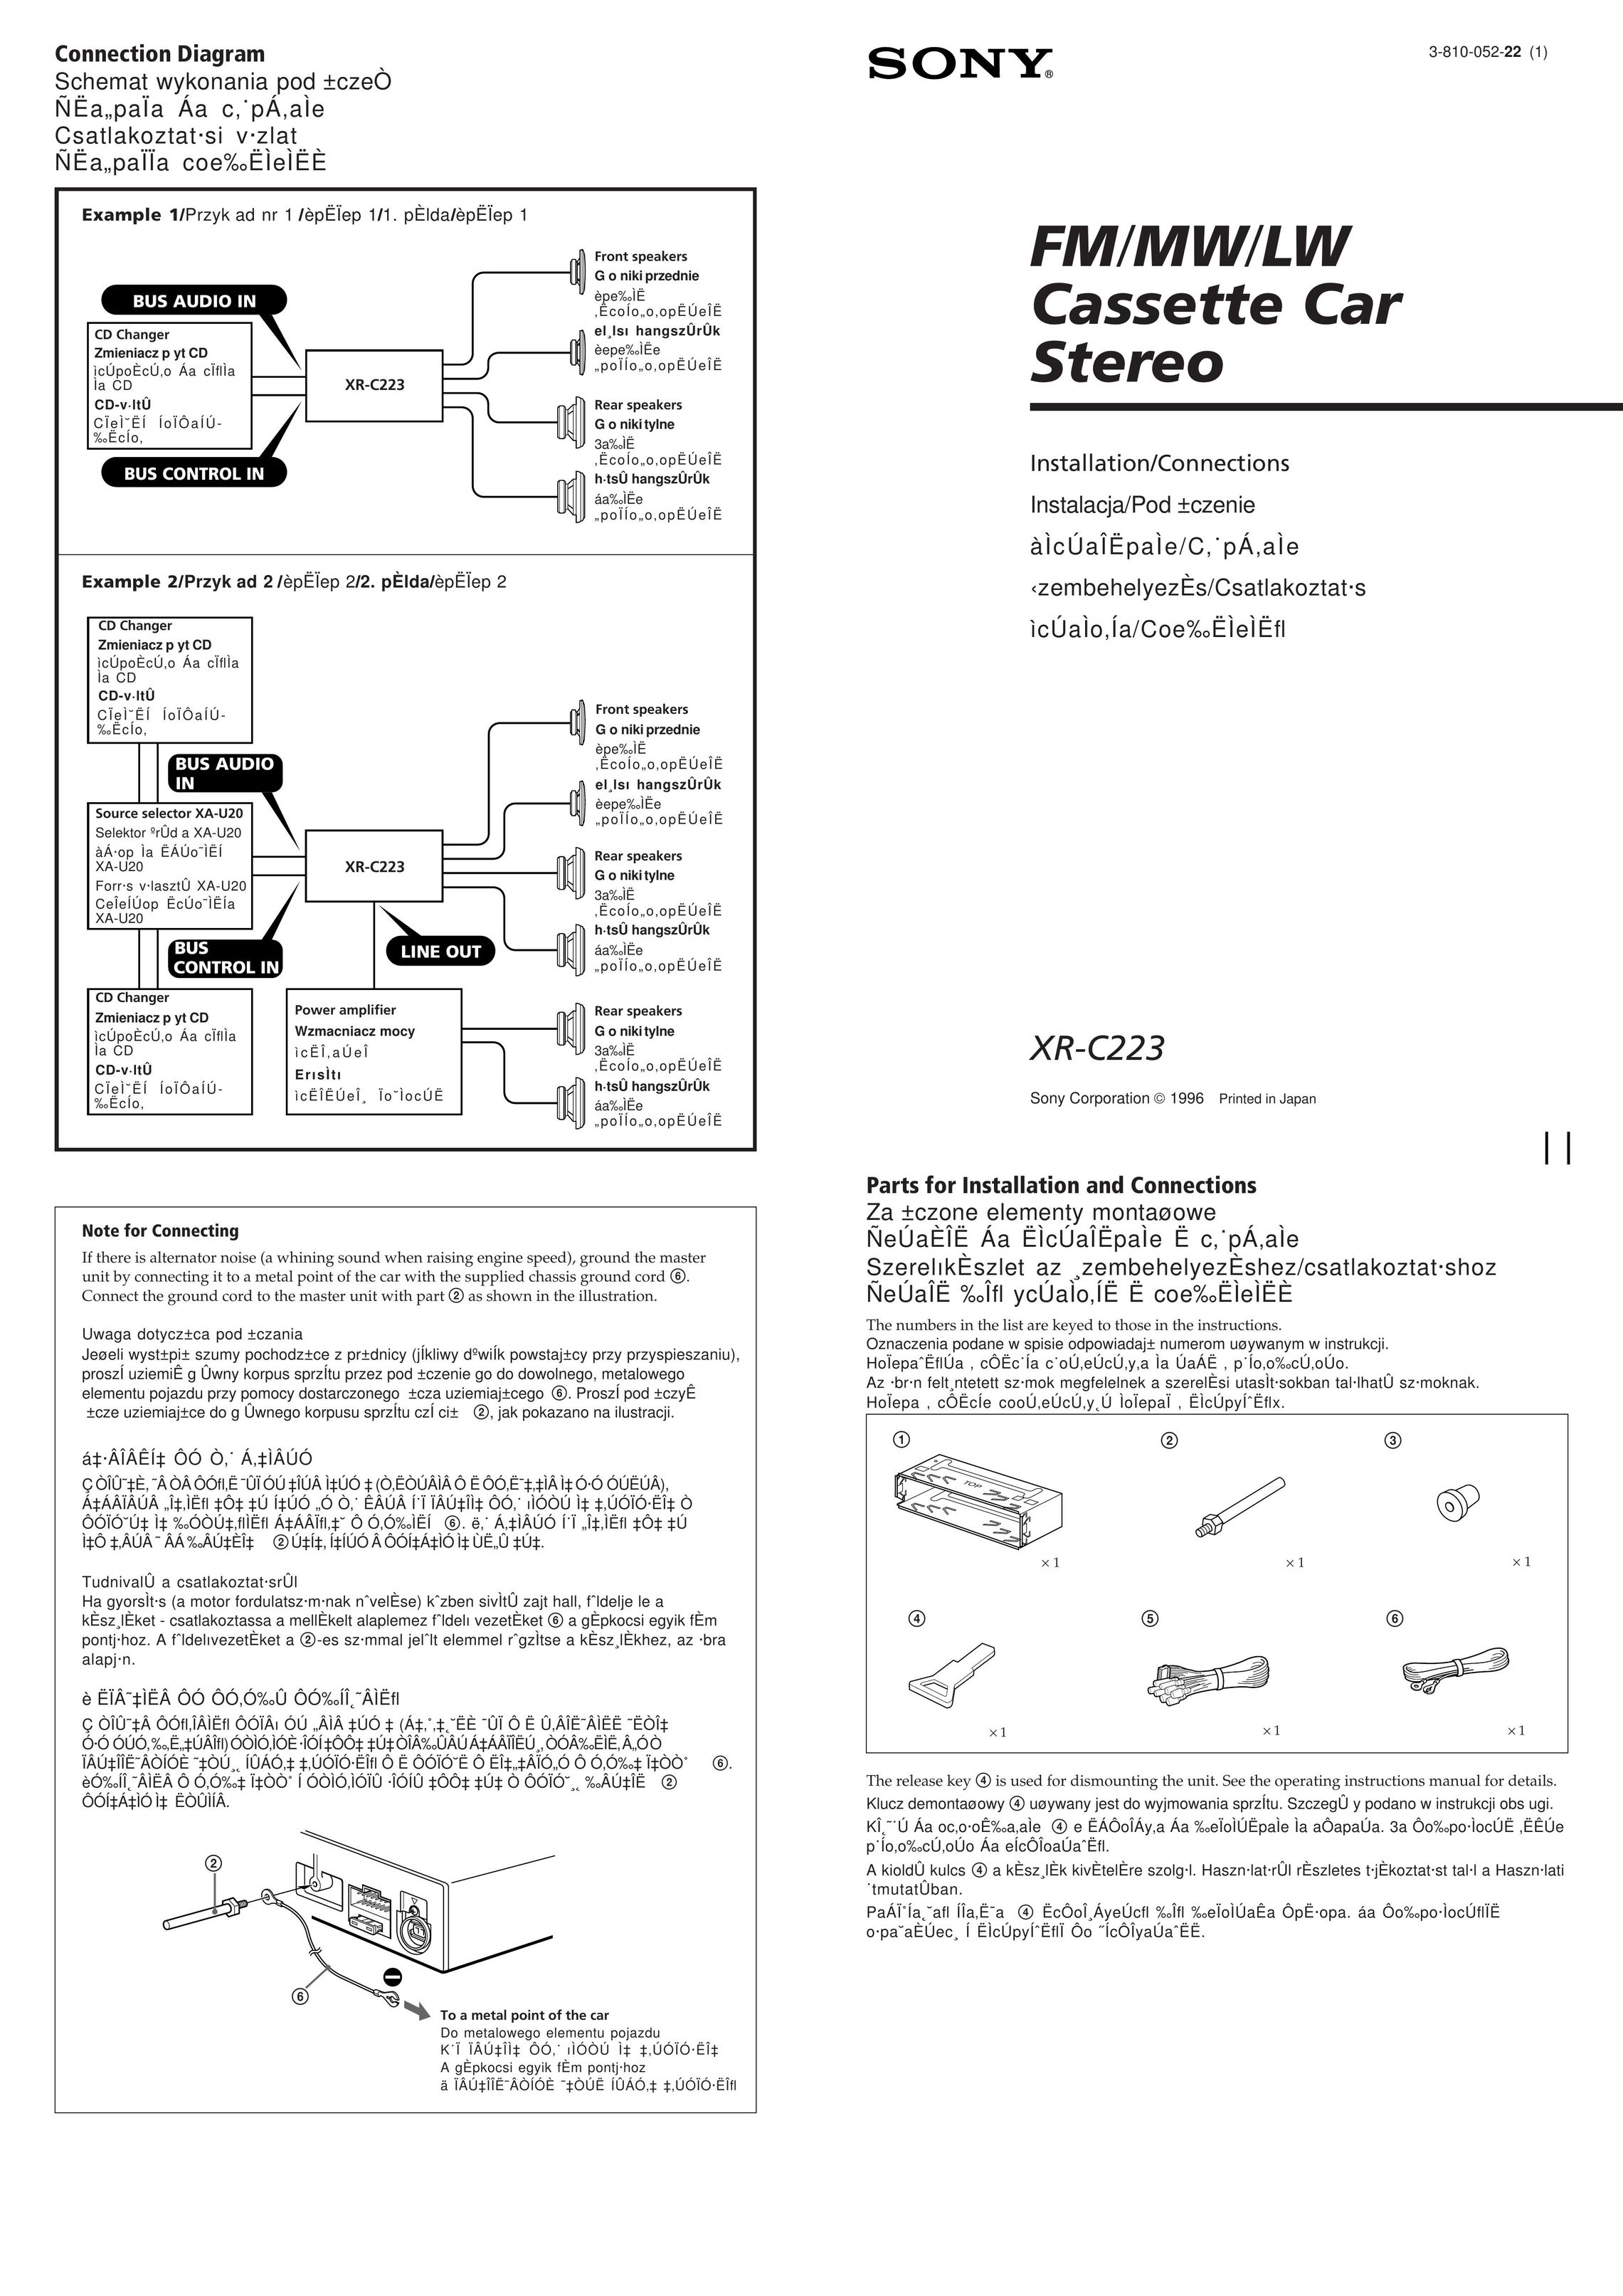 Sony XR-C223 Car Video System User Manual